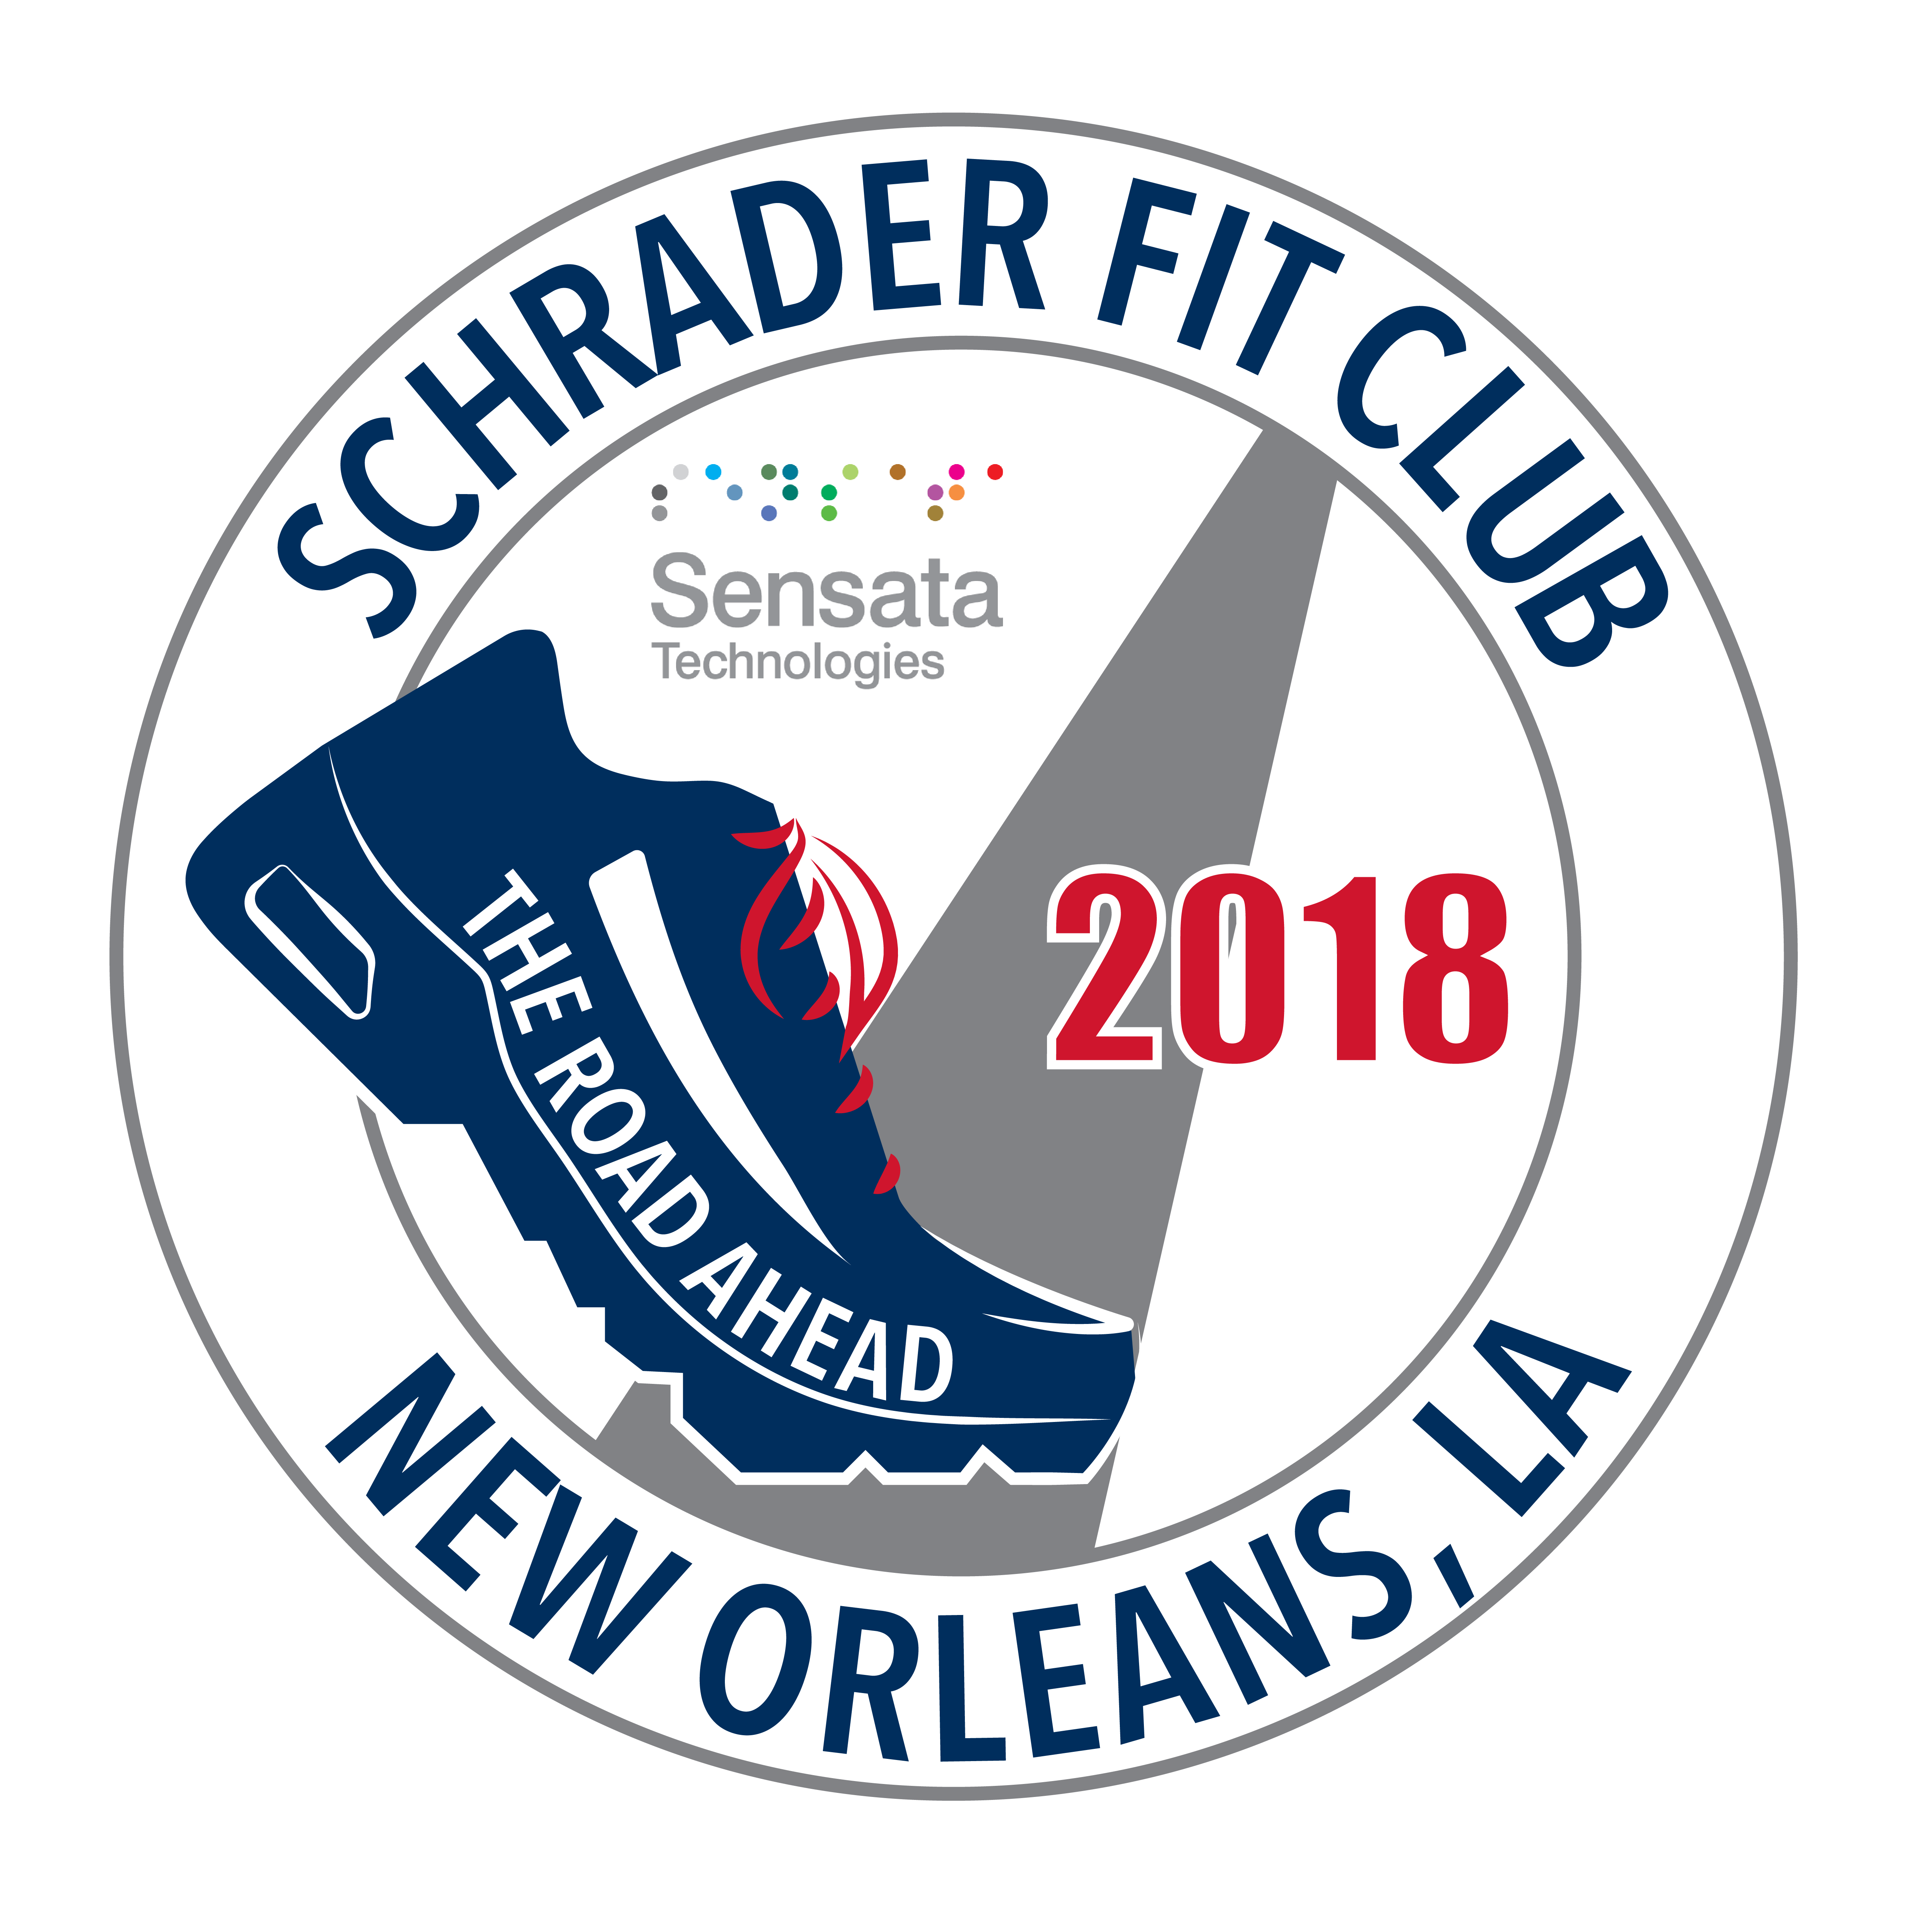 Logotipo de Schrader Fit Club